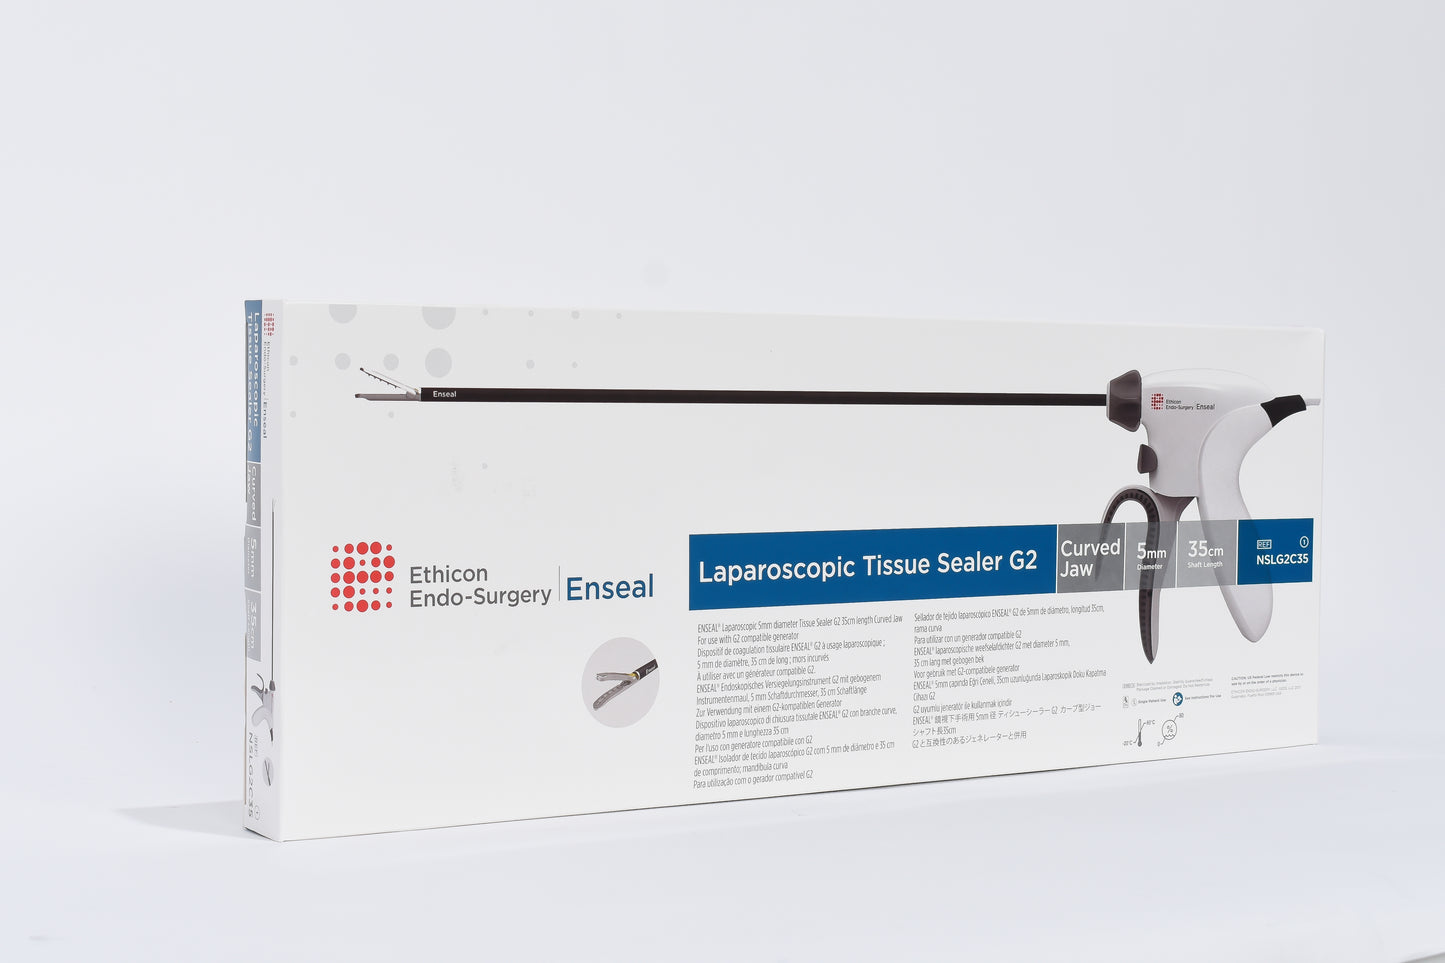 Ethicon Endo-Surgery G2 Laparoscopic Tissue Sealer, 5mm Diameter, 35cm Length Curved Jaw NSLG2C35 - IN YEAR